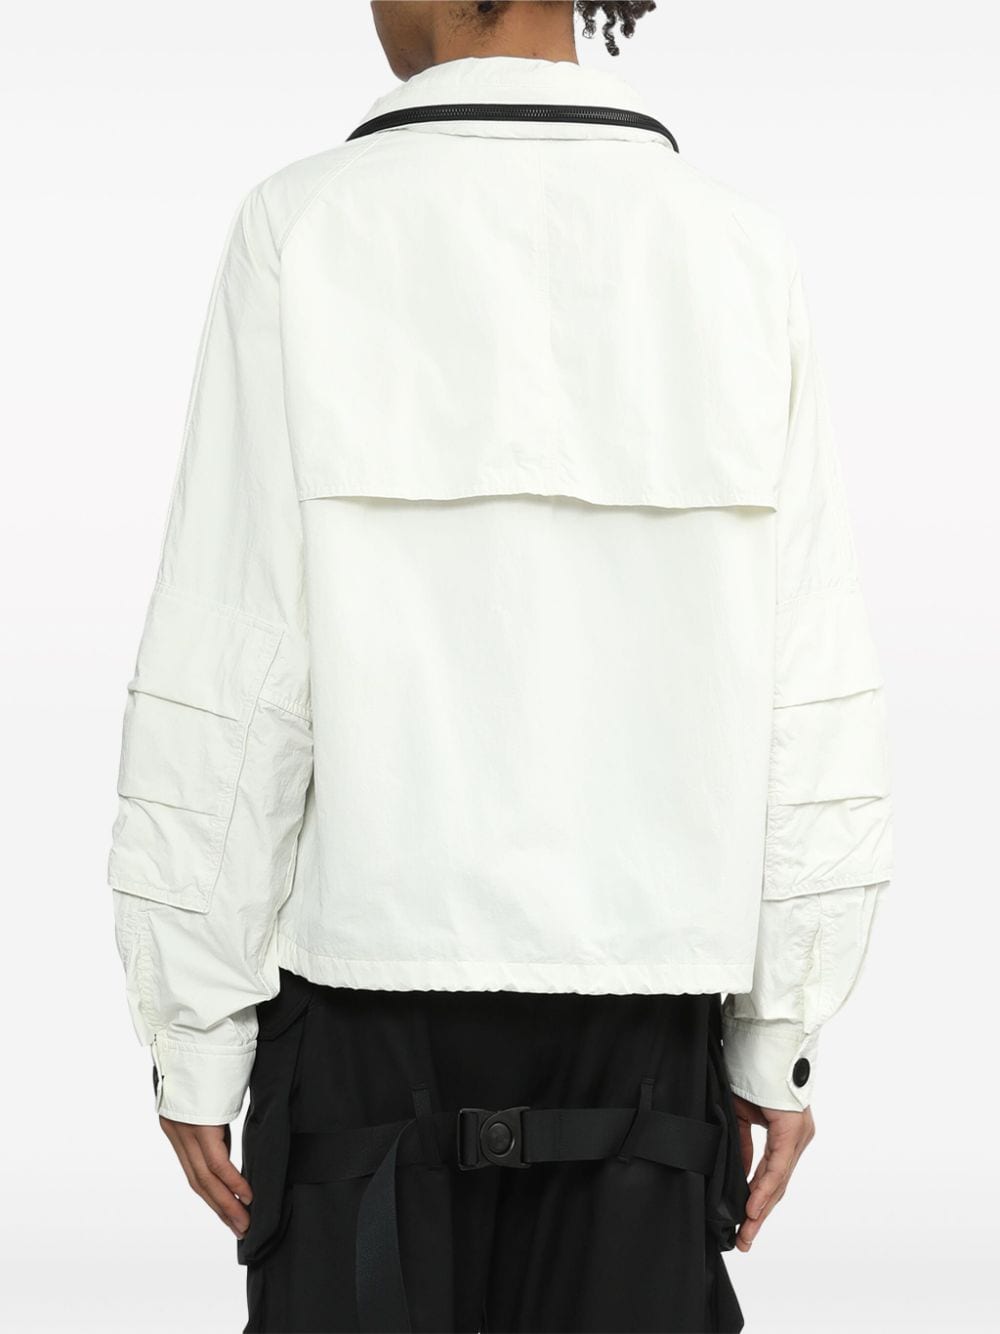 White nylon jacket